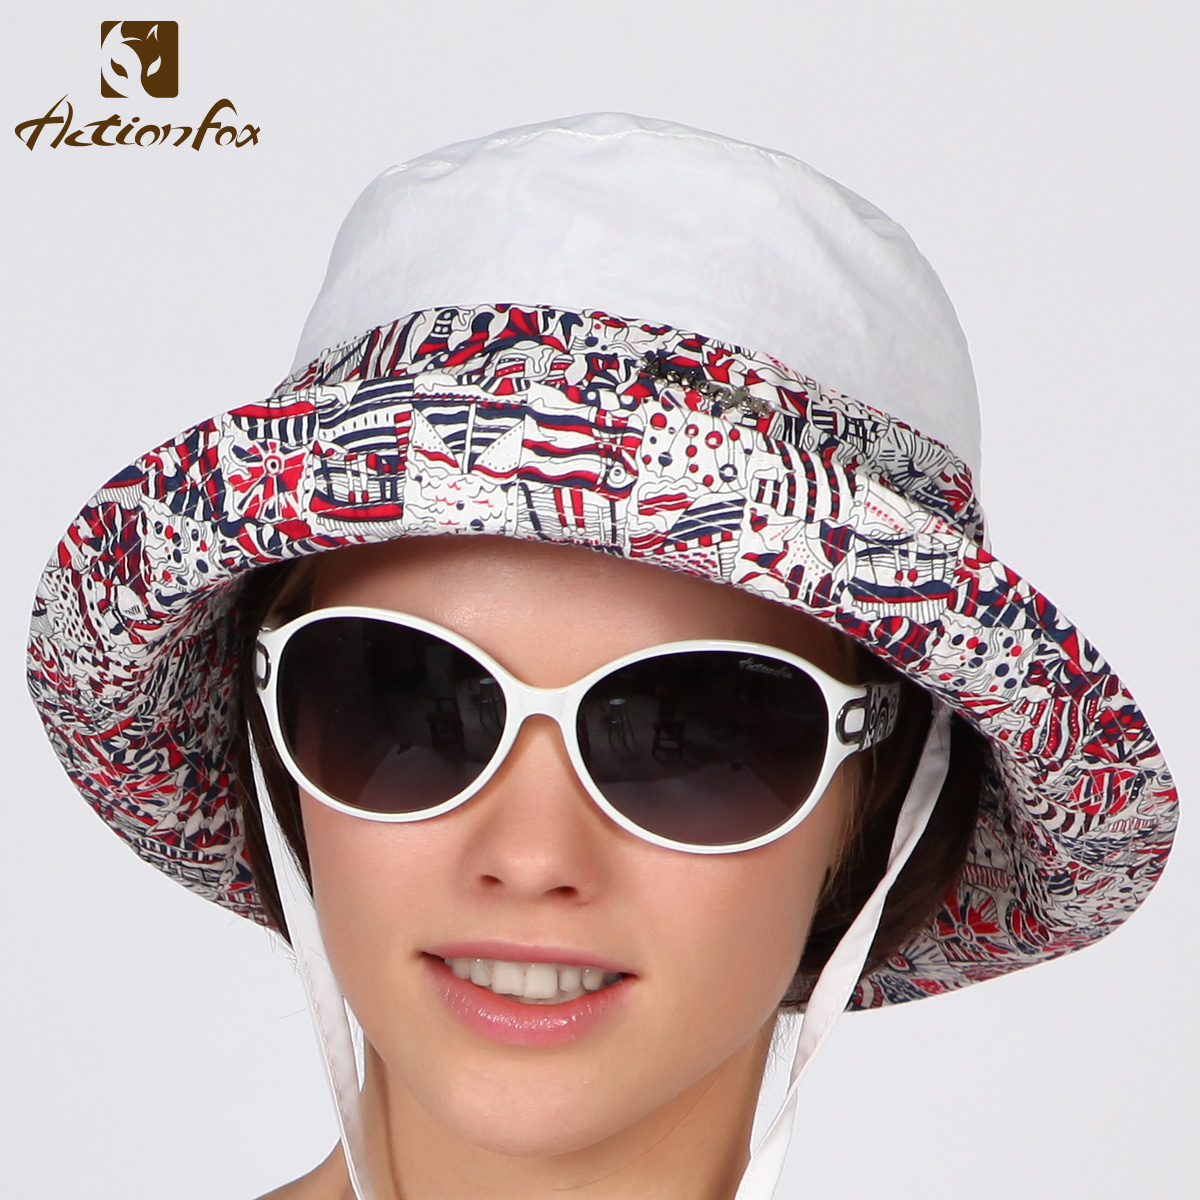 2013 Actionfox small bucket hat bucket hats women's summer outdoor quick-drying sunbonnet decorative pattern